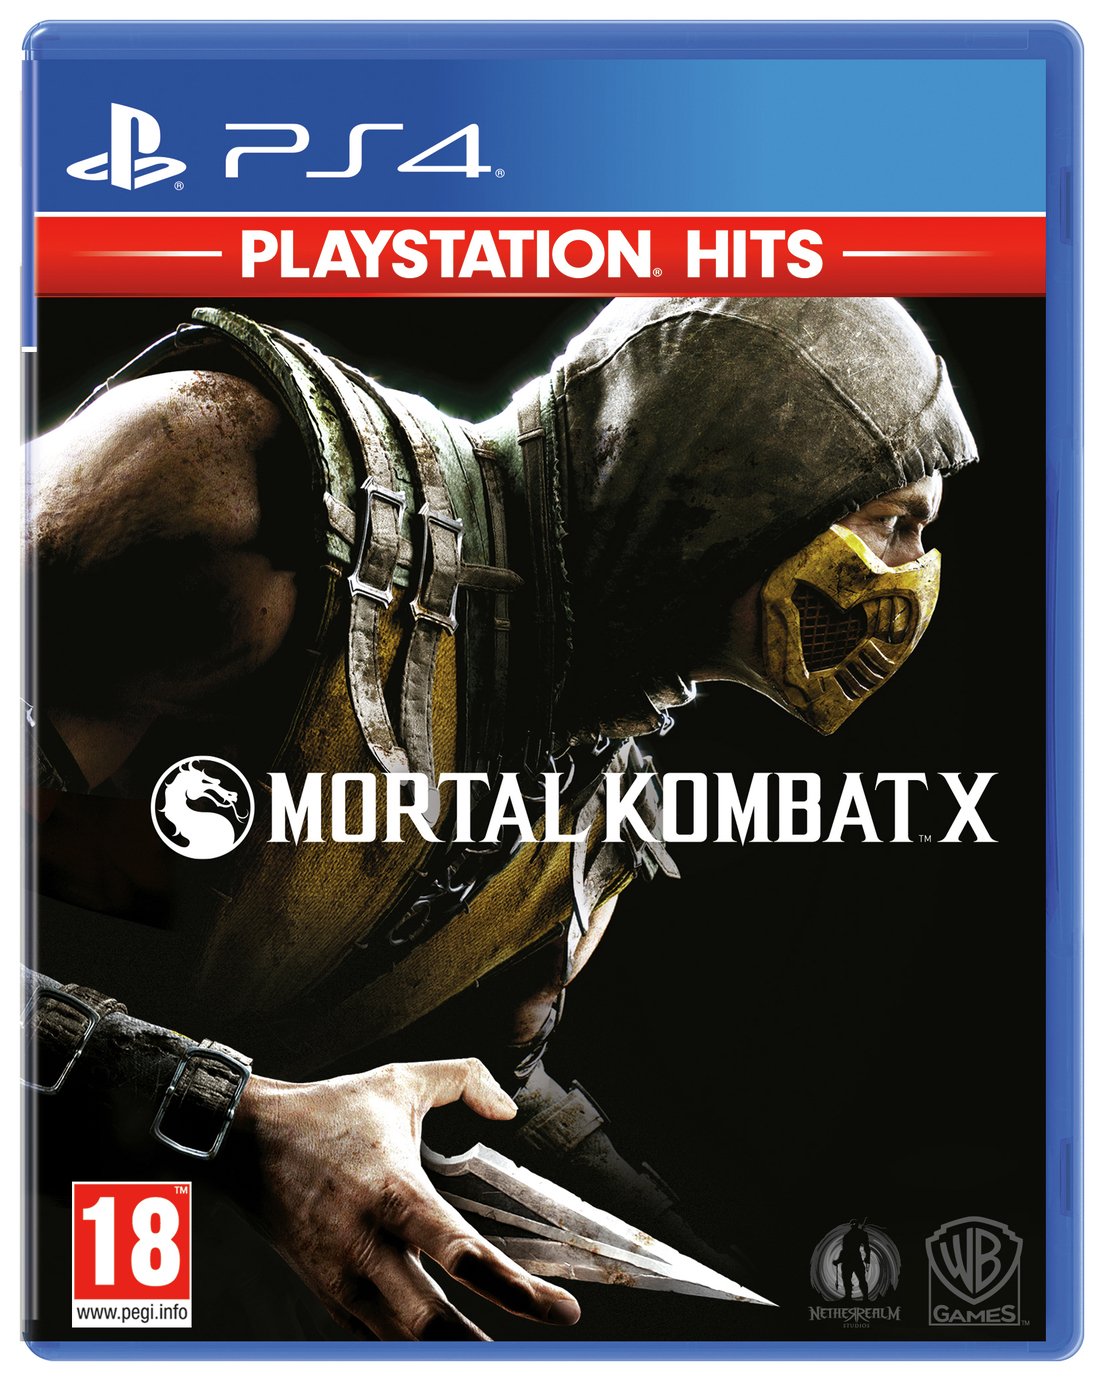 Mortal Kombat X PS4 Hits Game